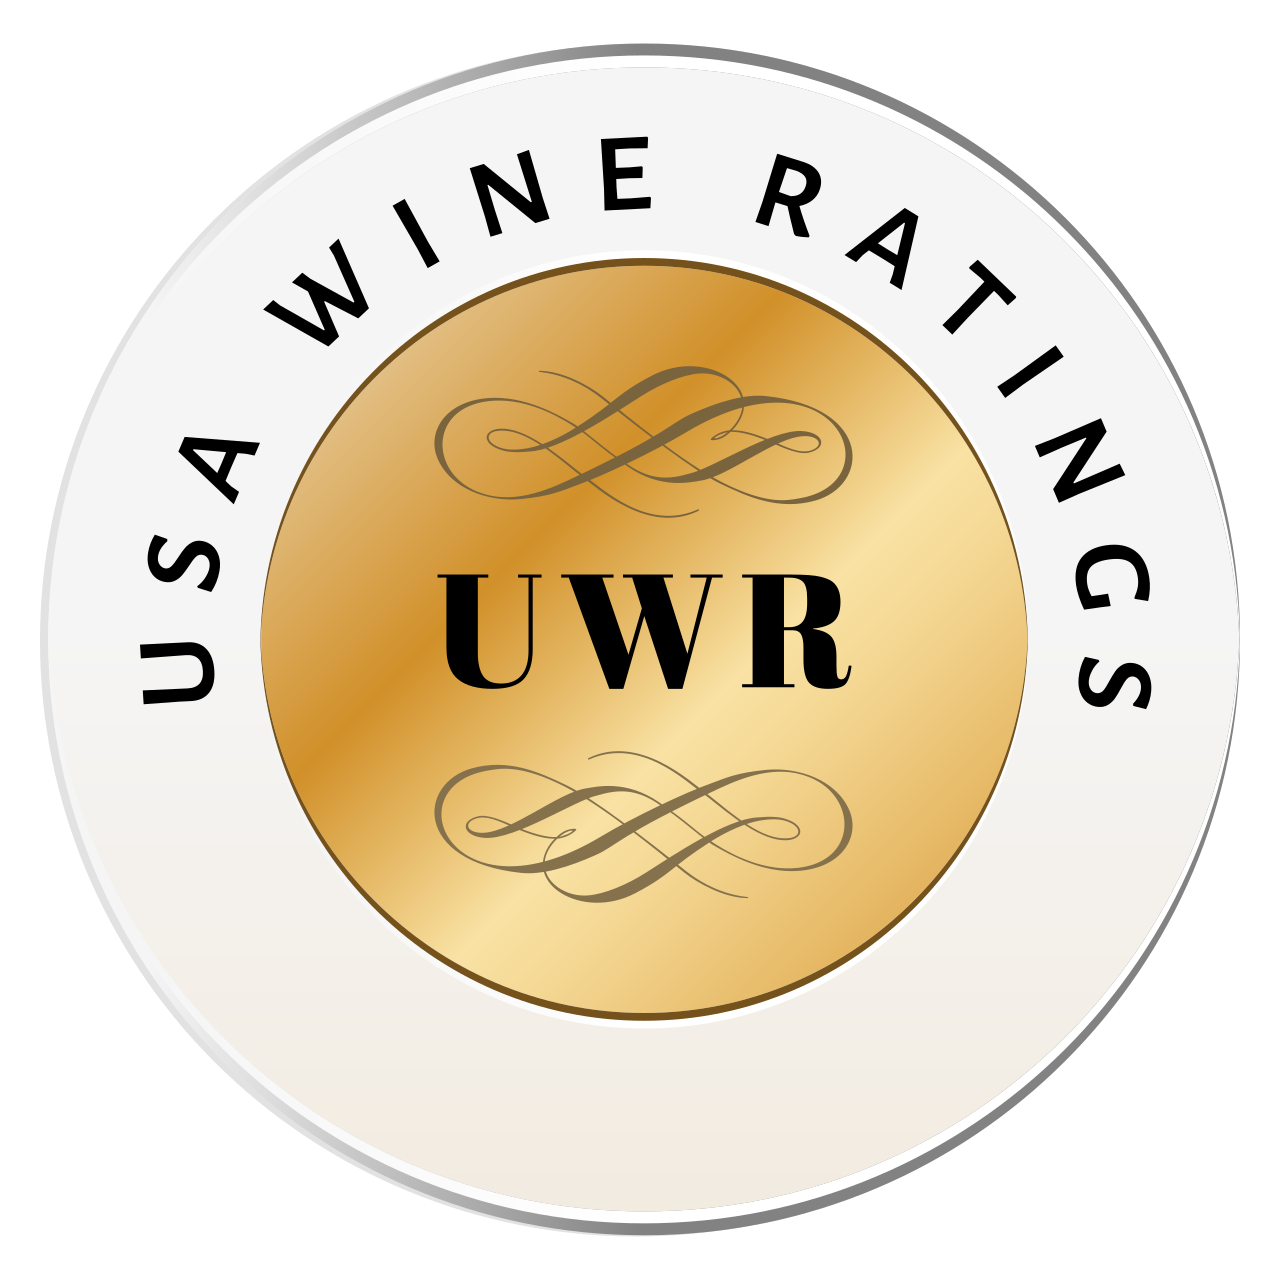 USA Wine Ratings Logo